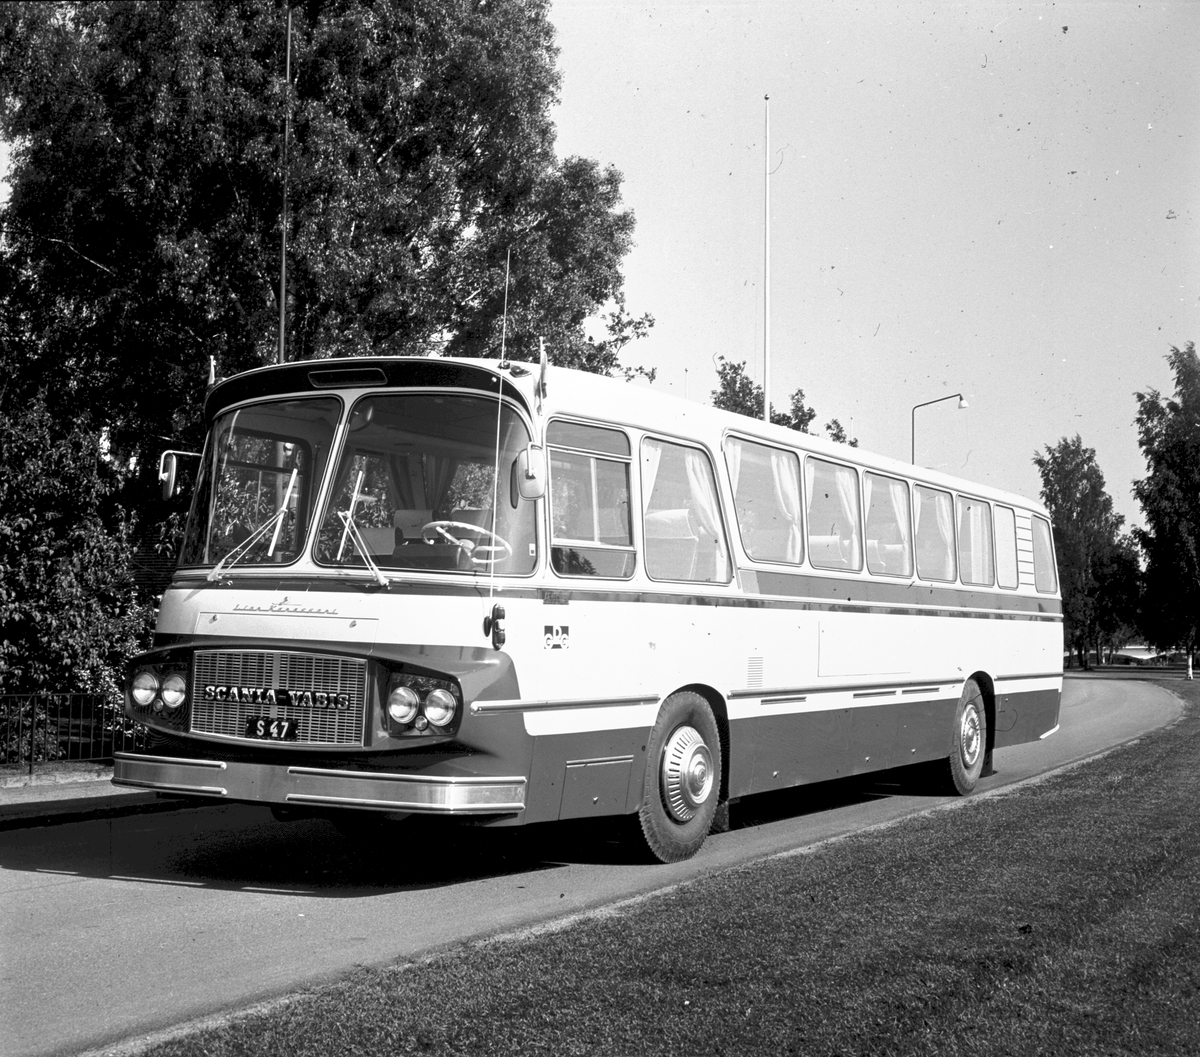 Scania Vabis. GDG turistbuss. S 47.